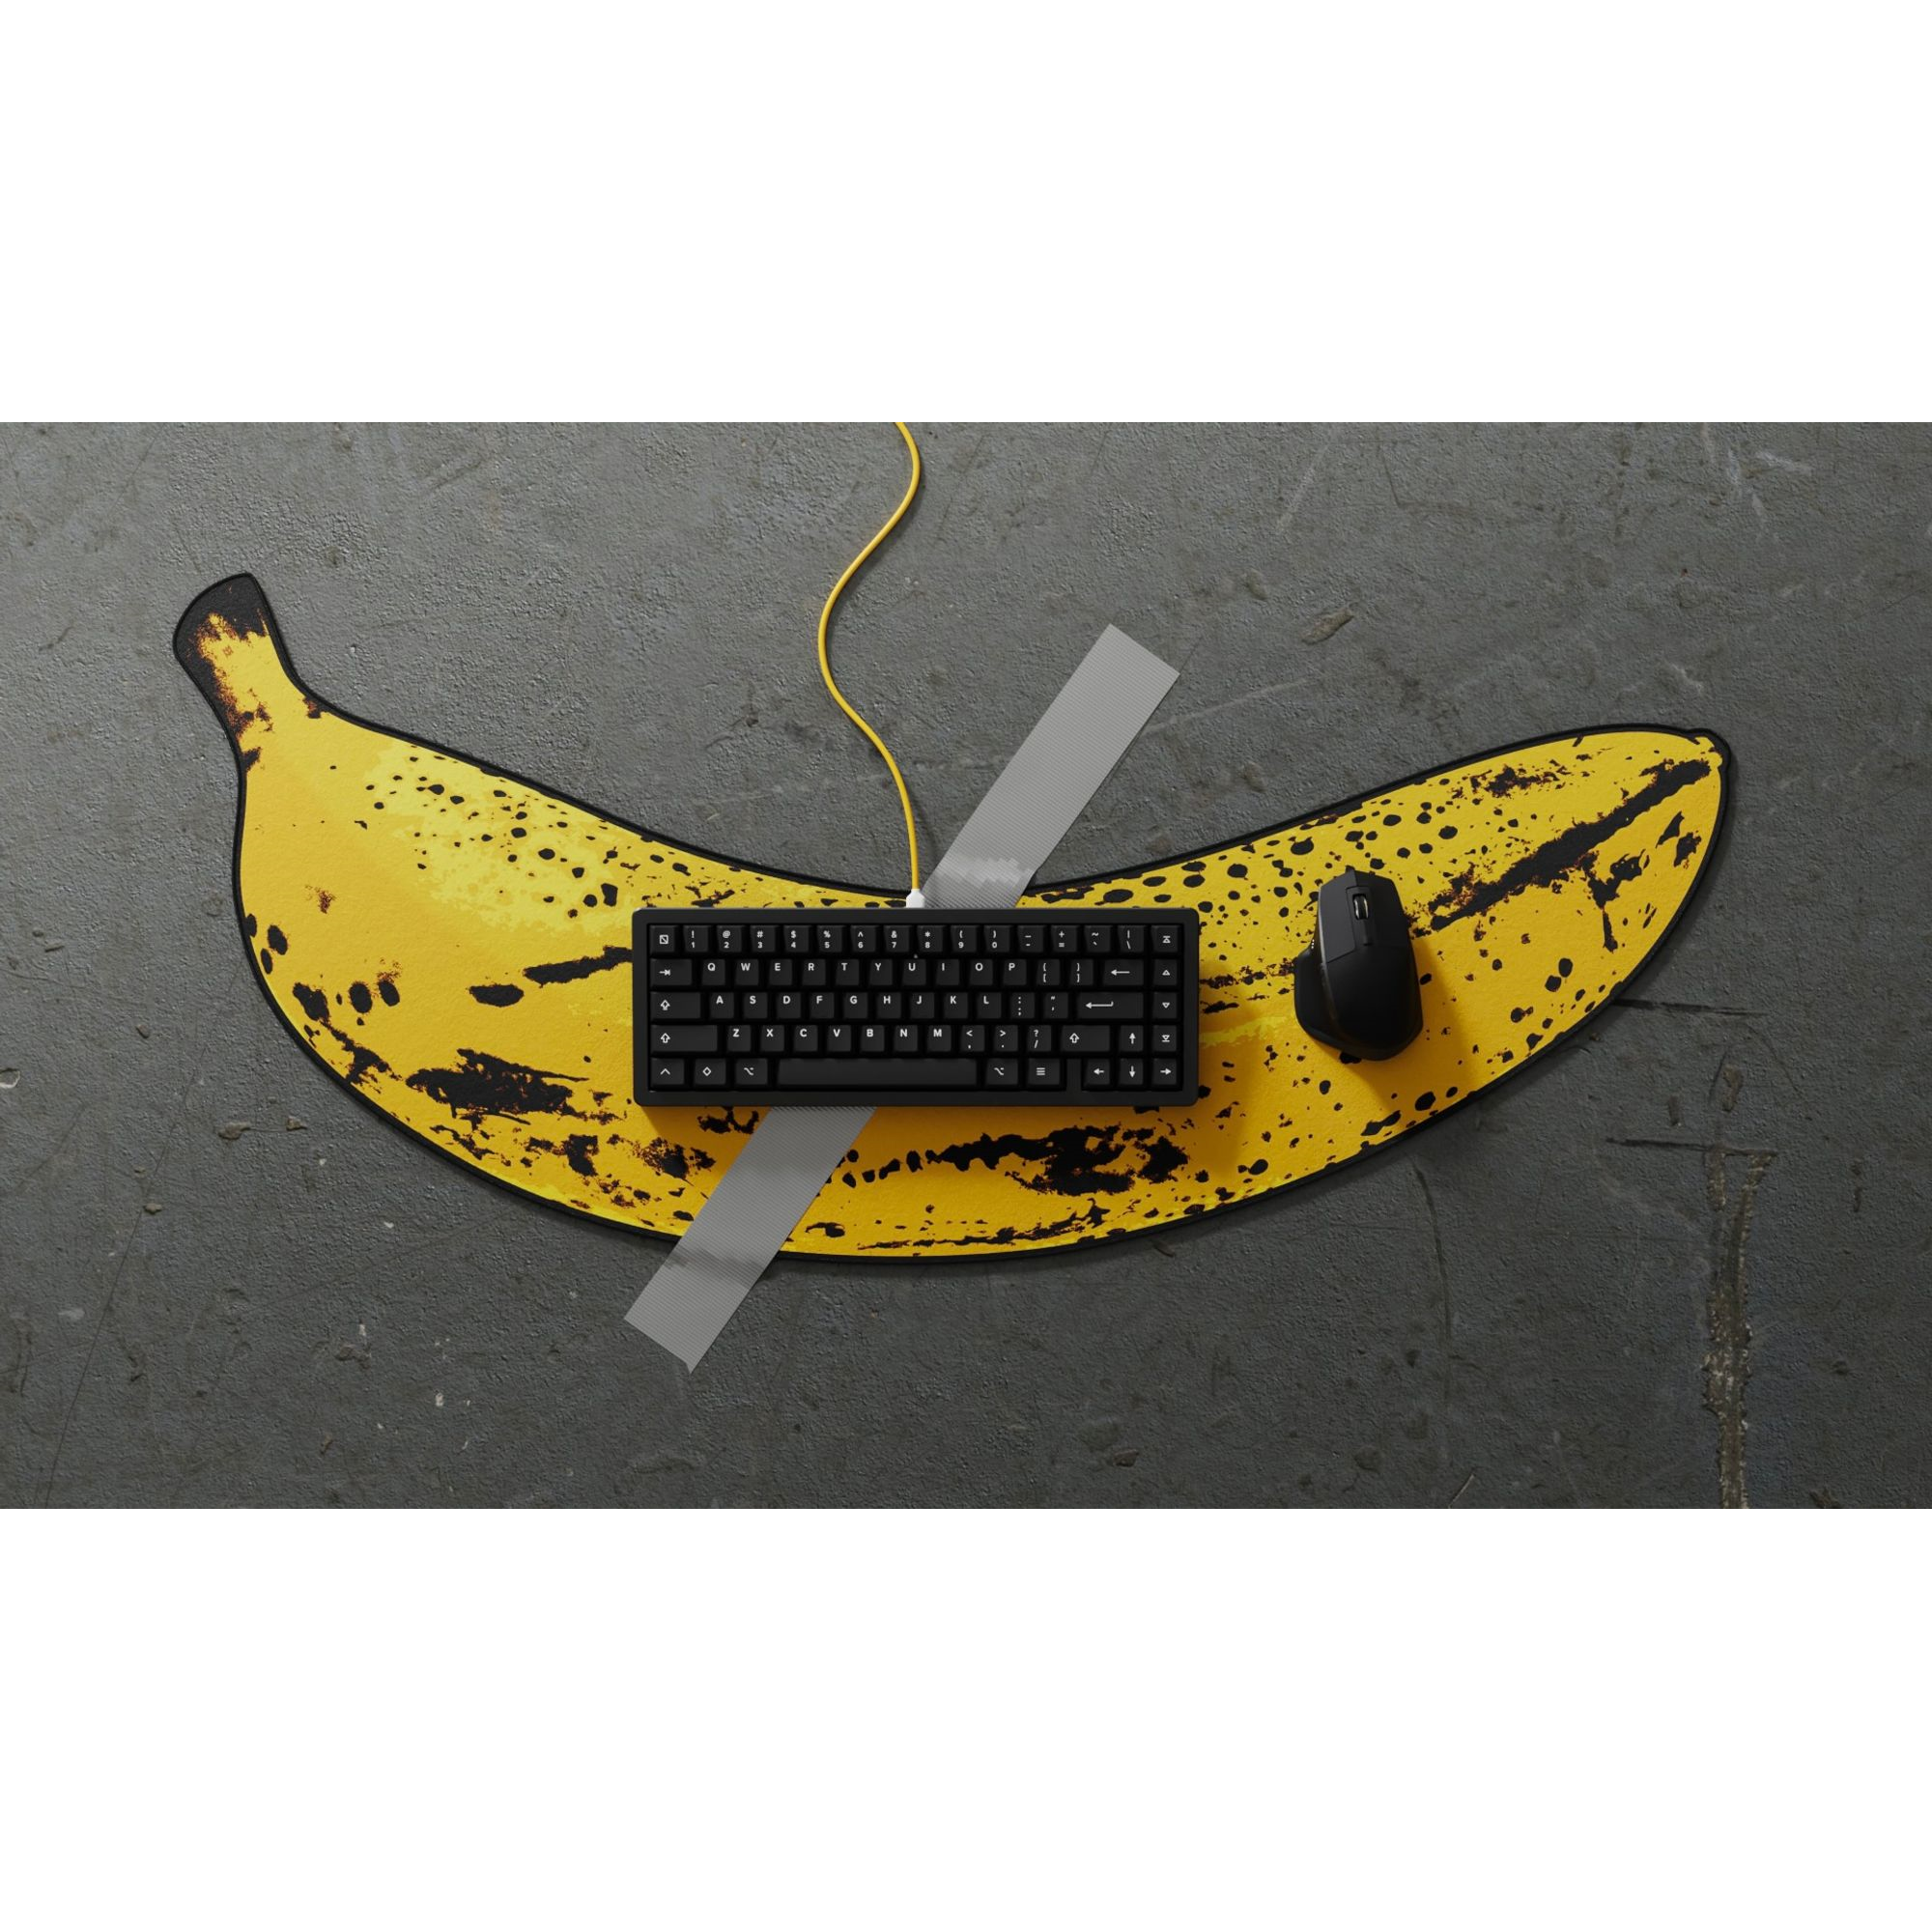 Banana Deskmat by MVKB